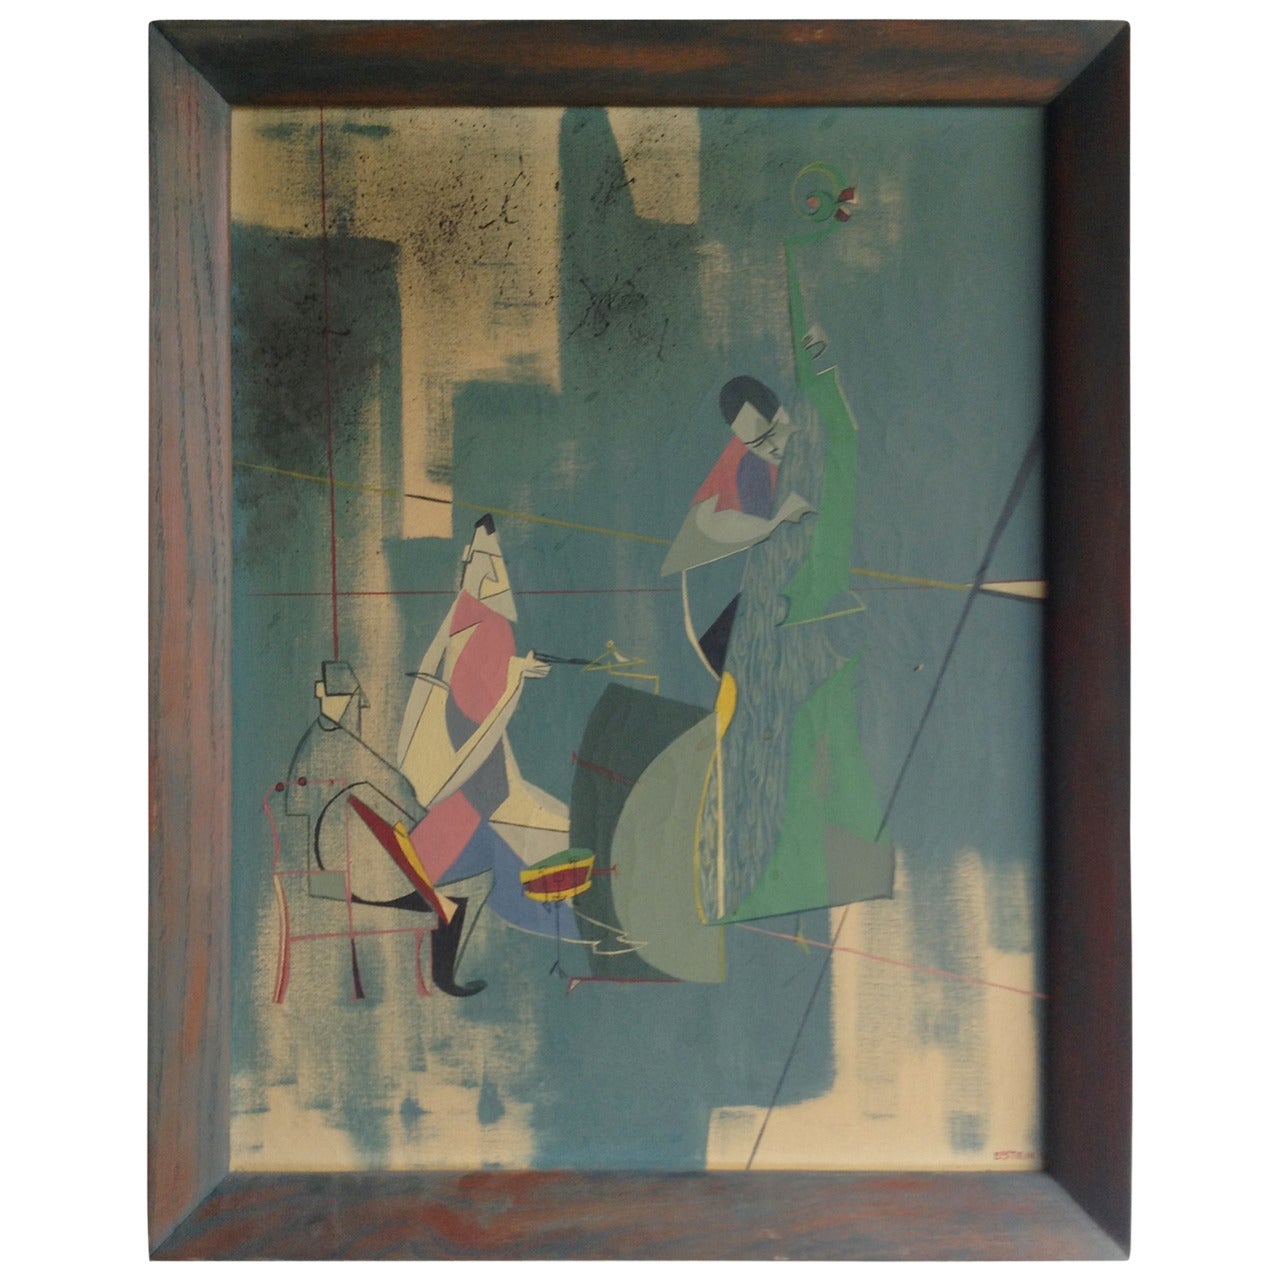 Modernist Cubist Jazz Trio Painting, , oil on board, , signed Efstein